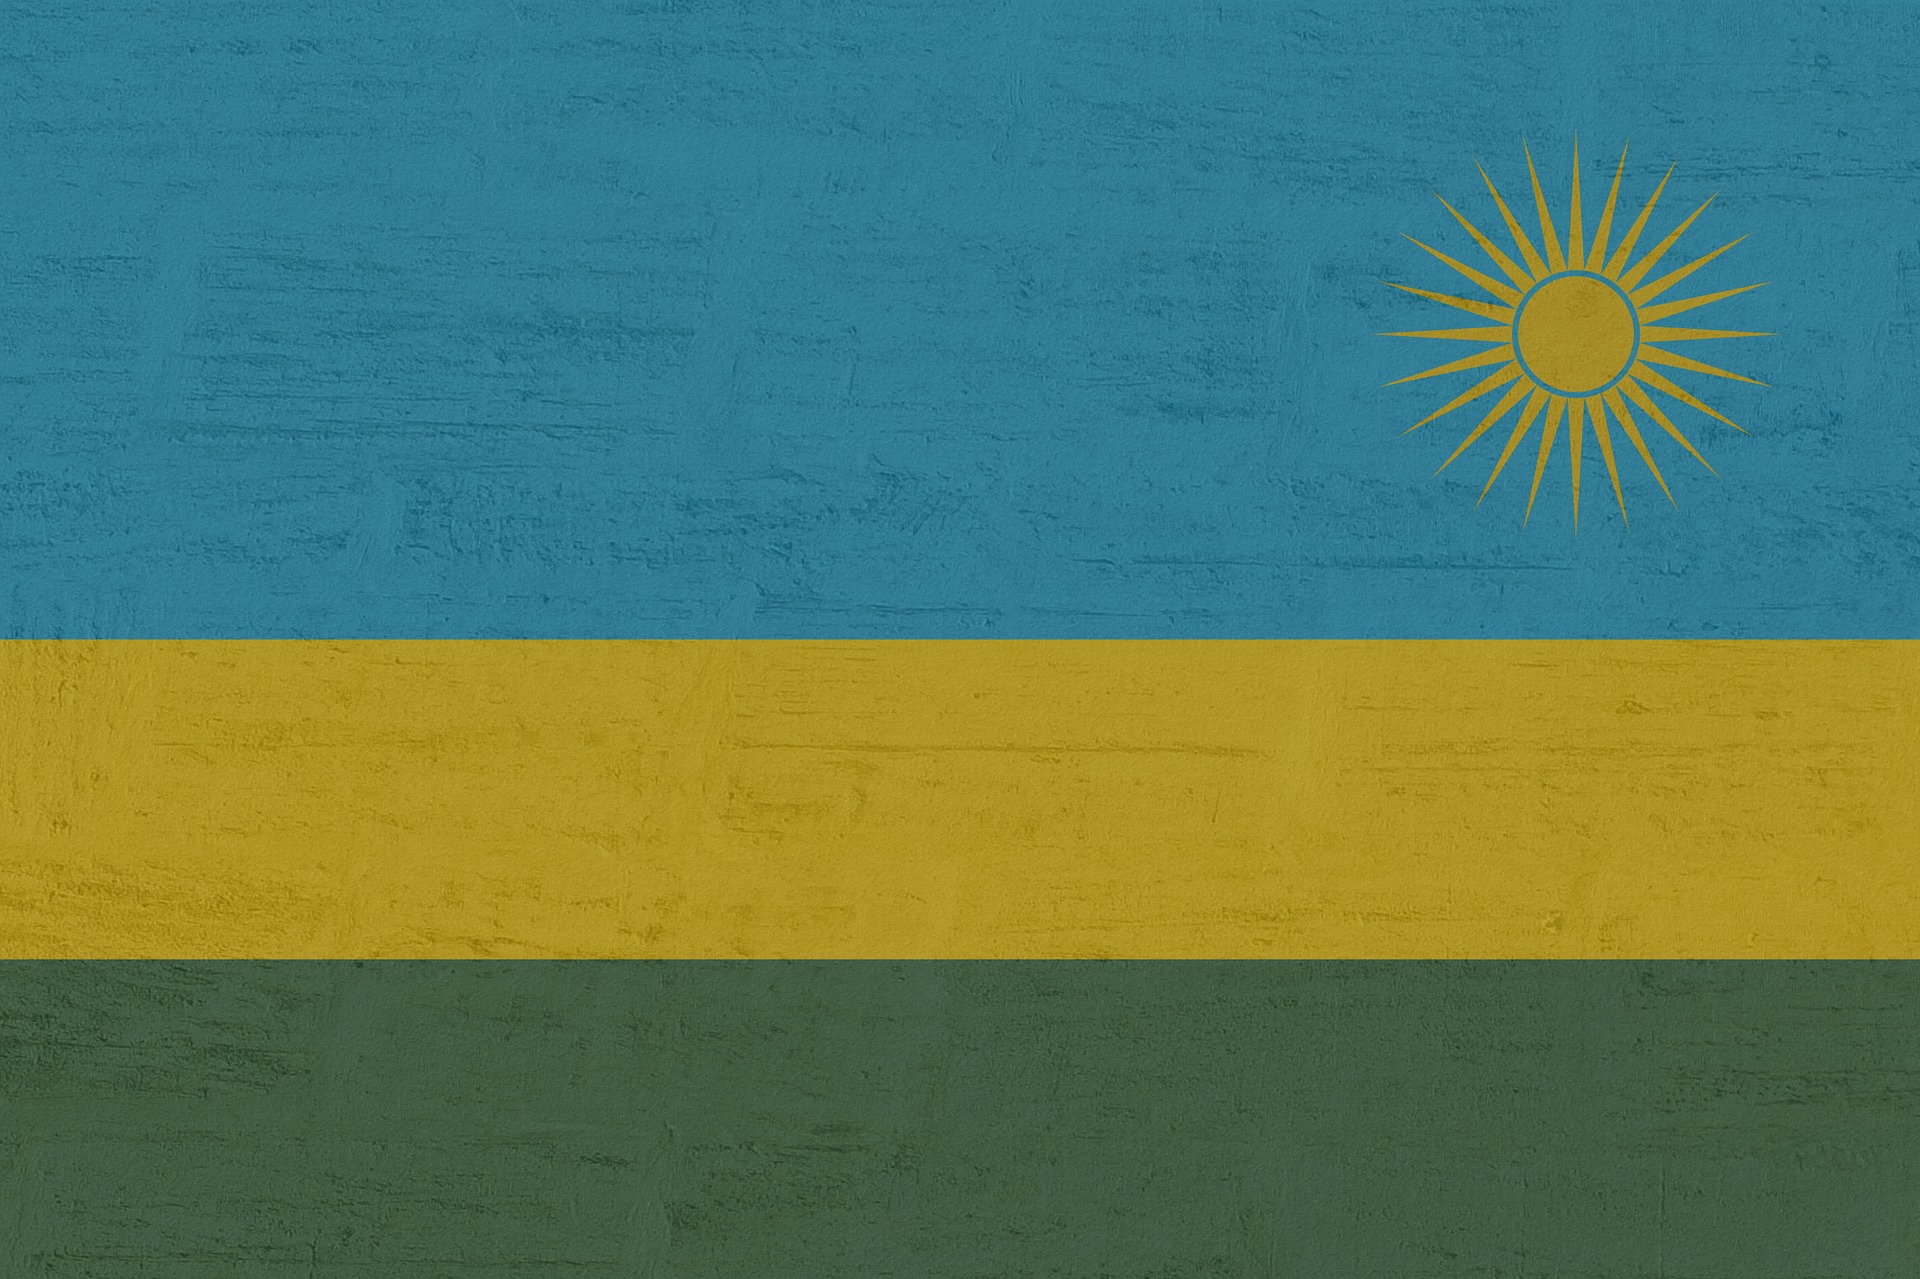 ruanda_flag-4.jpg